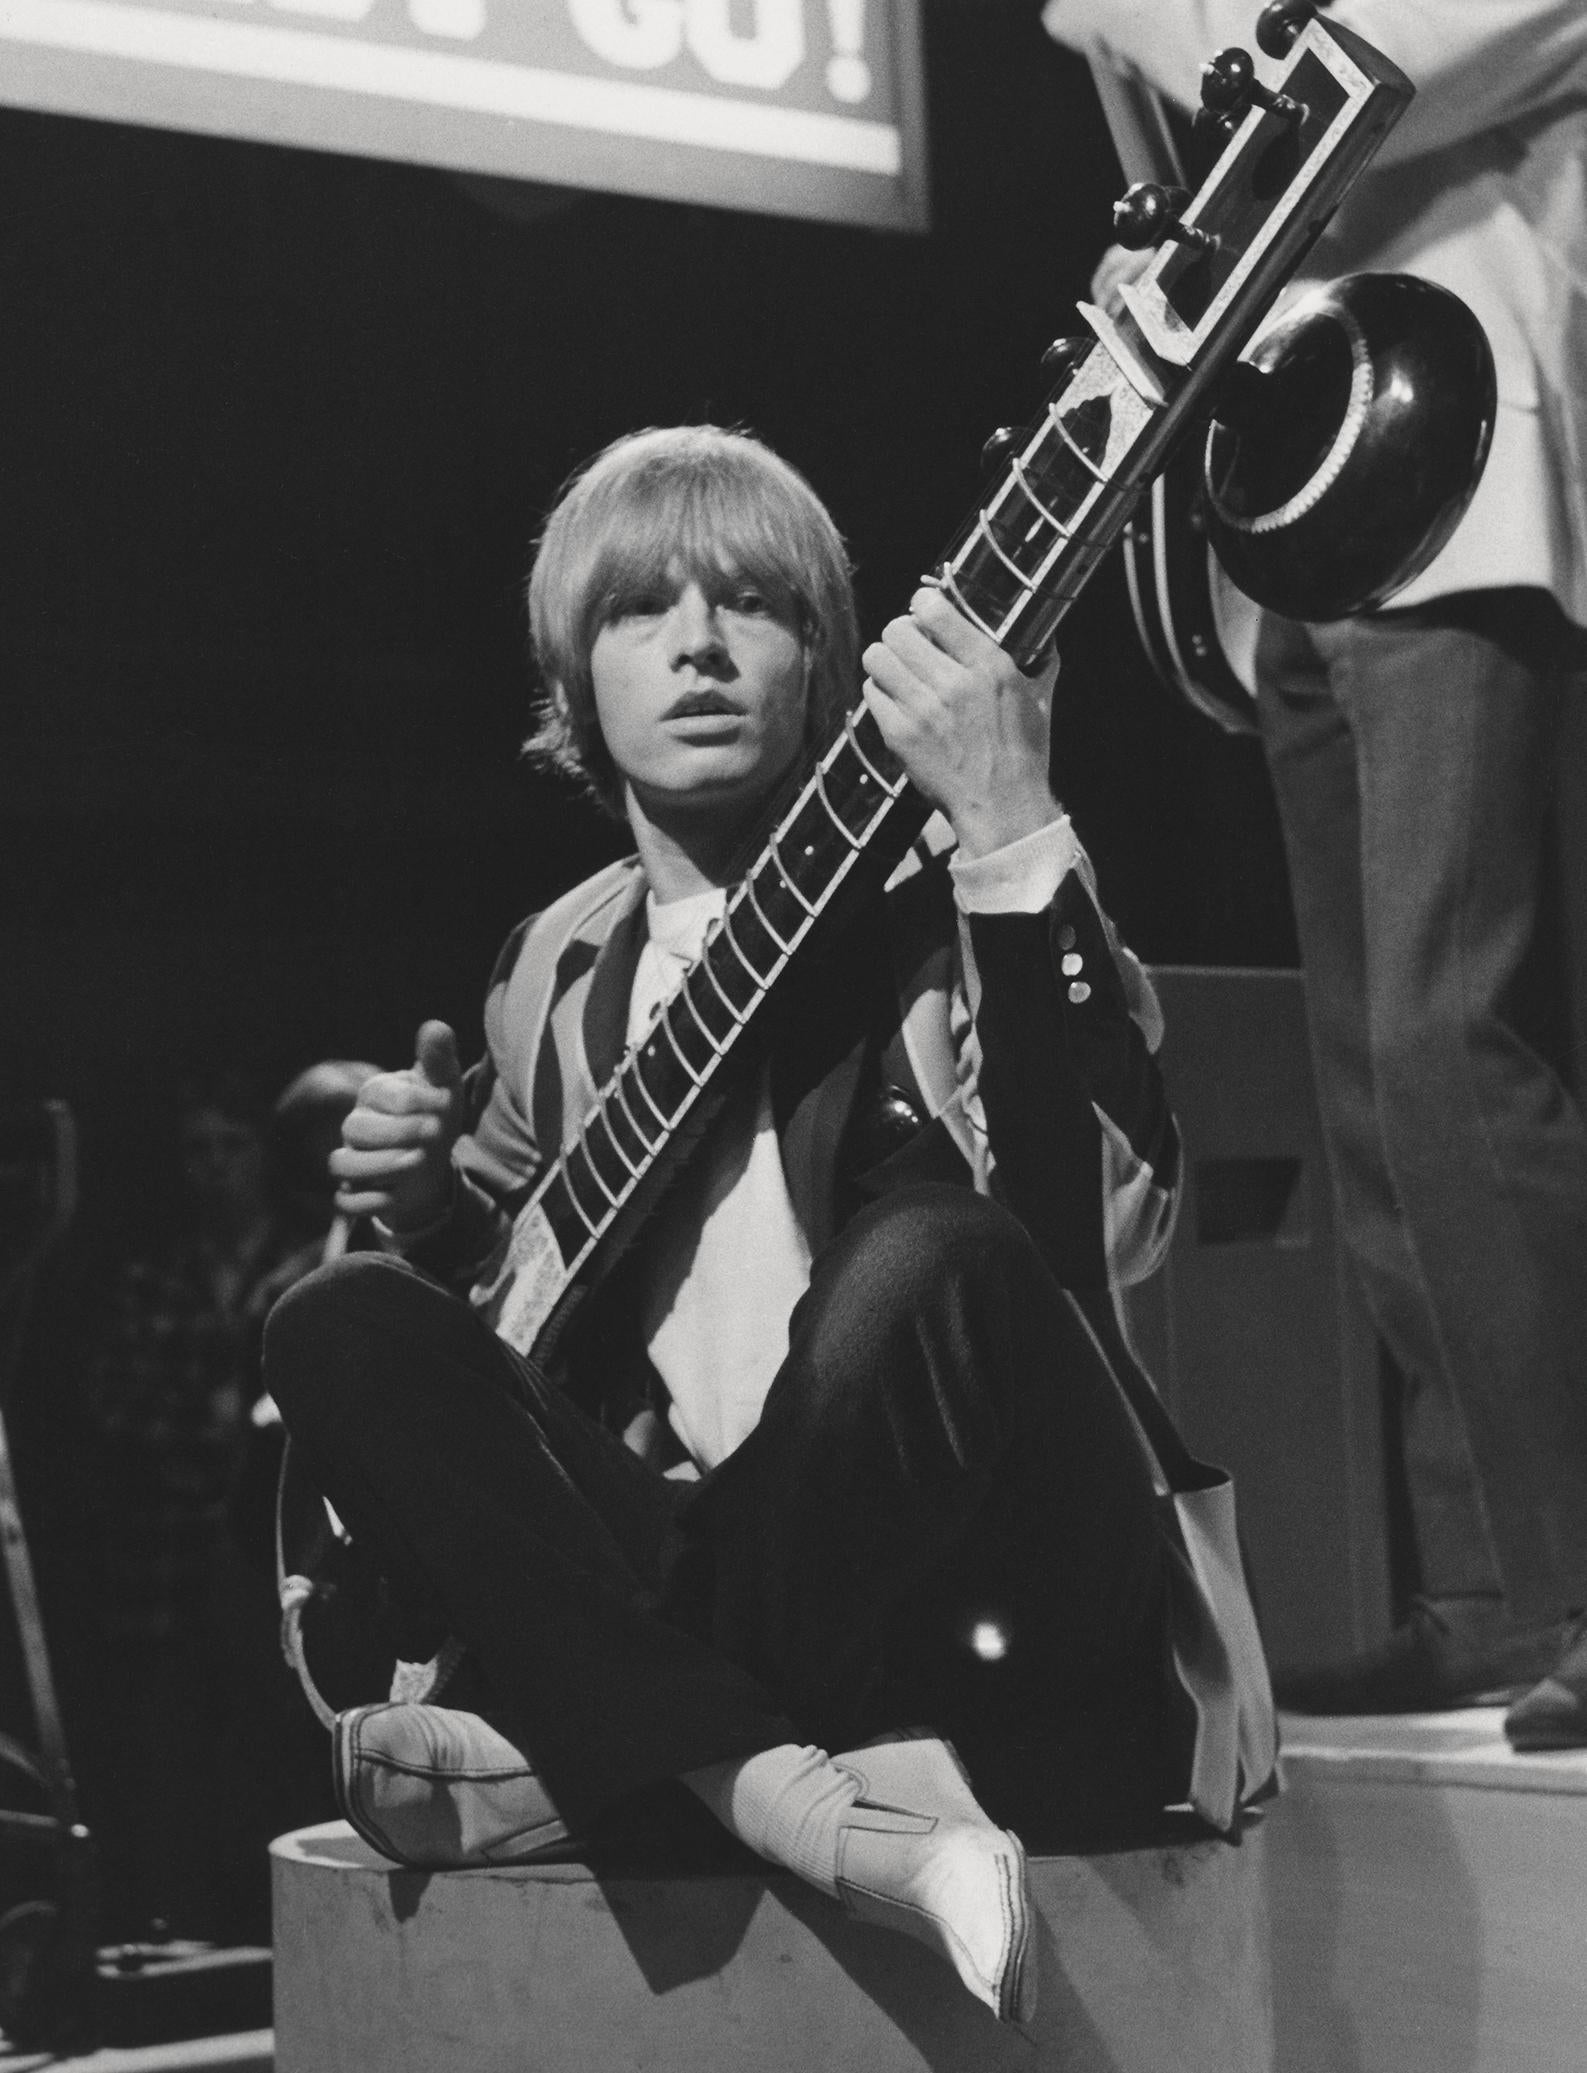 Unknown Portrait Photograph - Brian Jones of The Rolling Stones